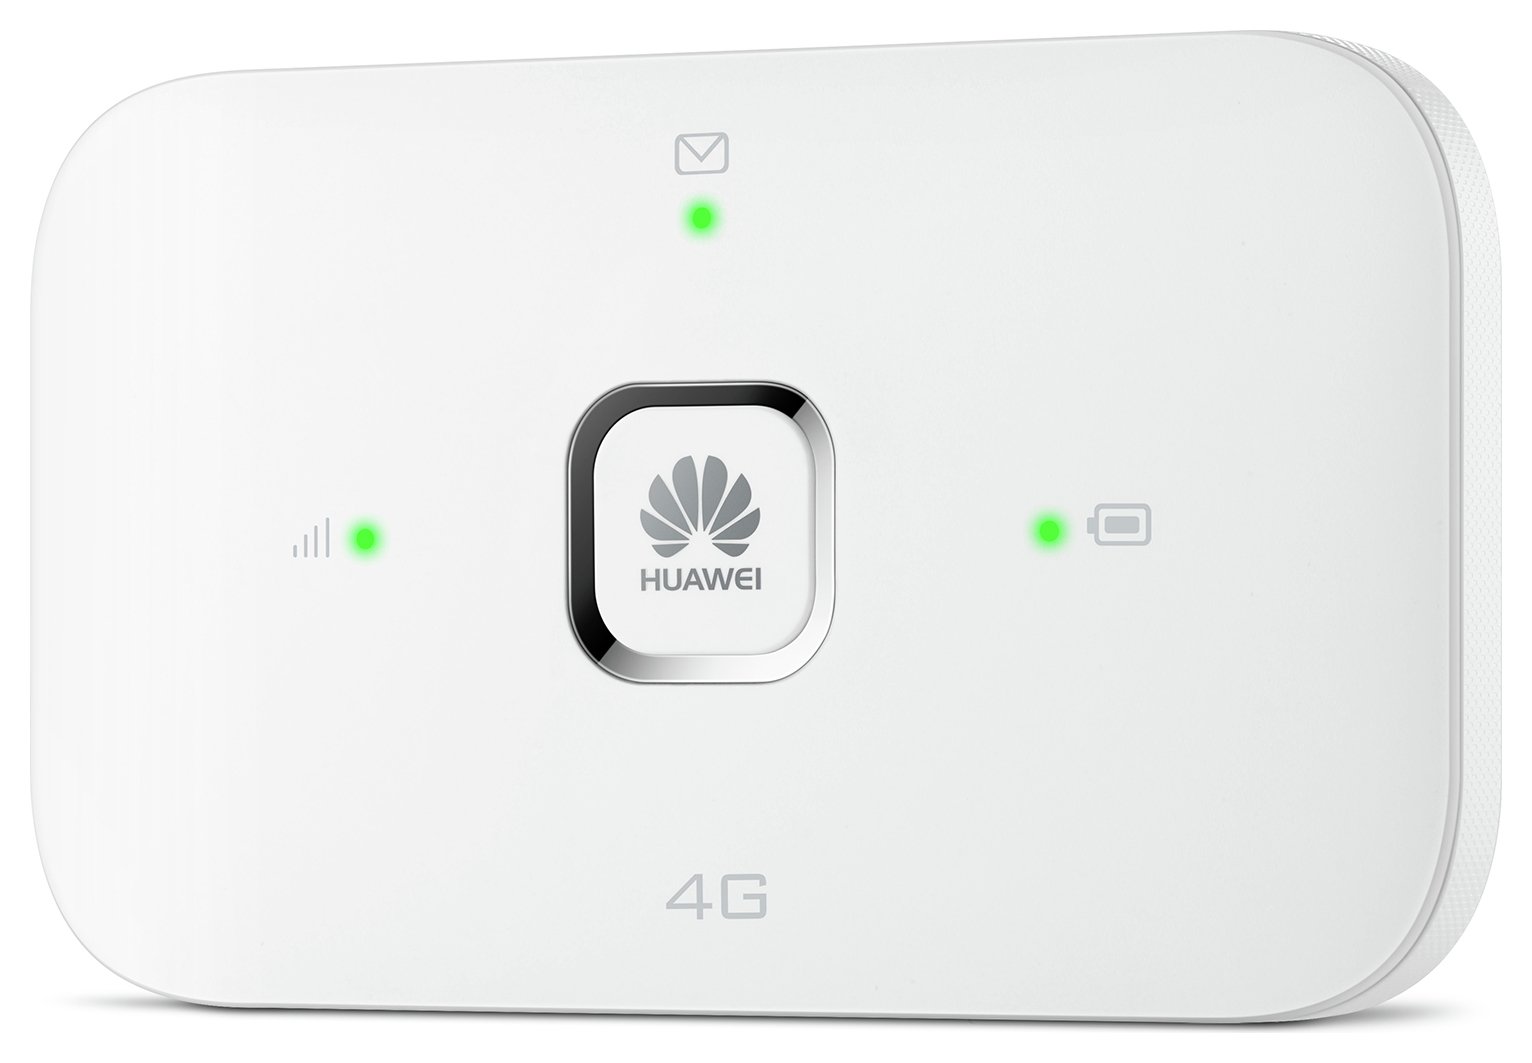 Three Huawei E5573 4G 1GB Mobile Wi-Fi